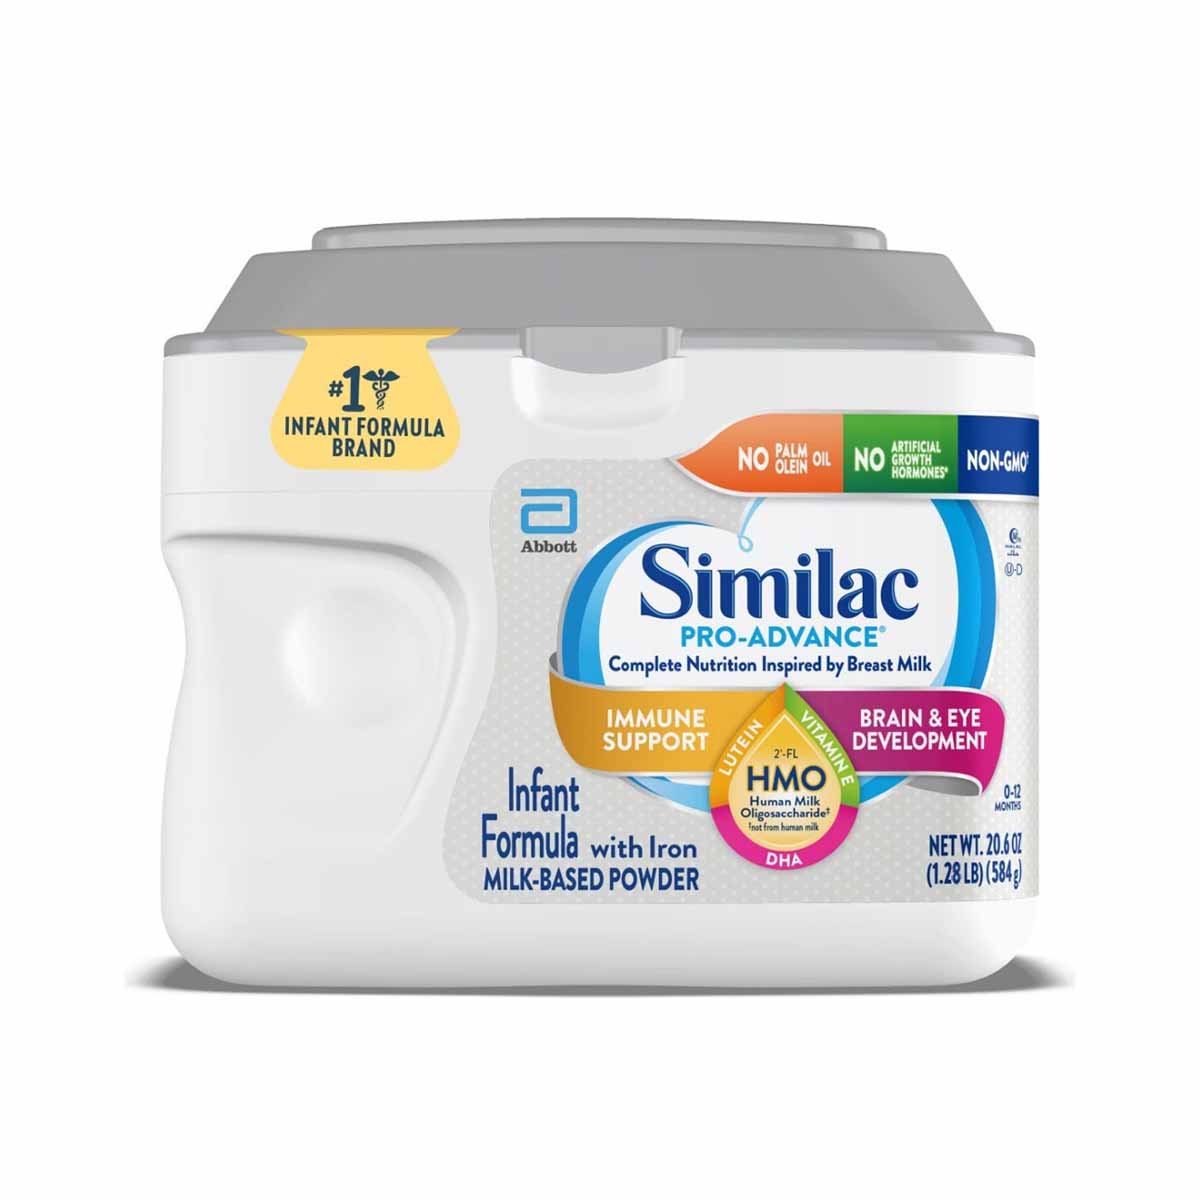 Similac Pro-Advance Infant Formula, with 2’-FL HMO for Immune Support, Non-GMO, Baby Formula, Powder, 584g